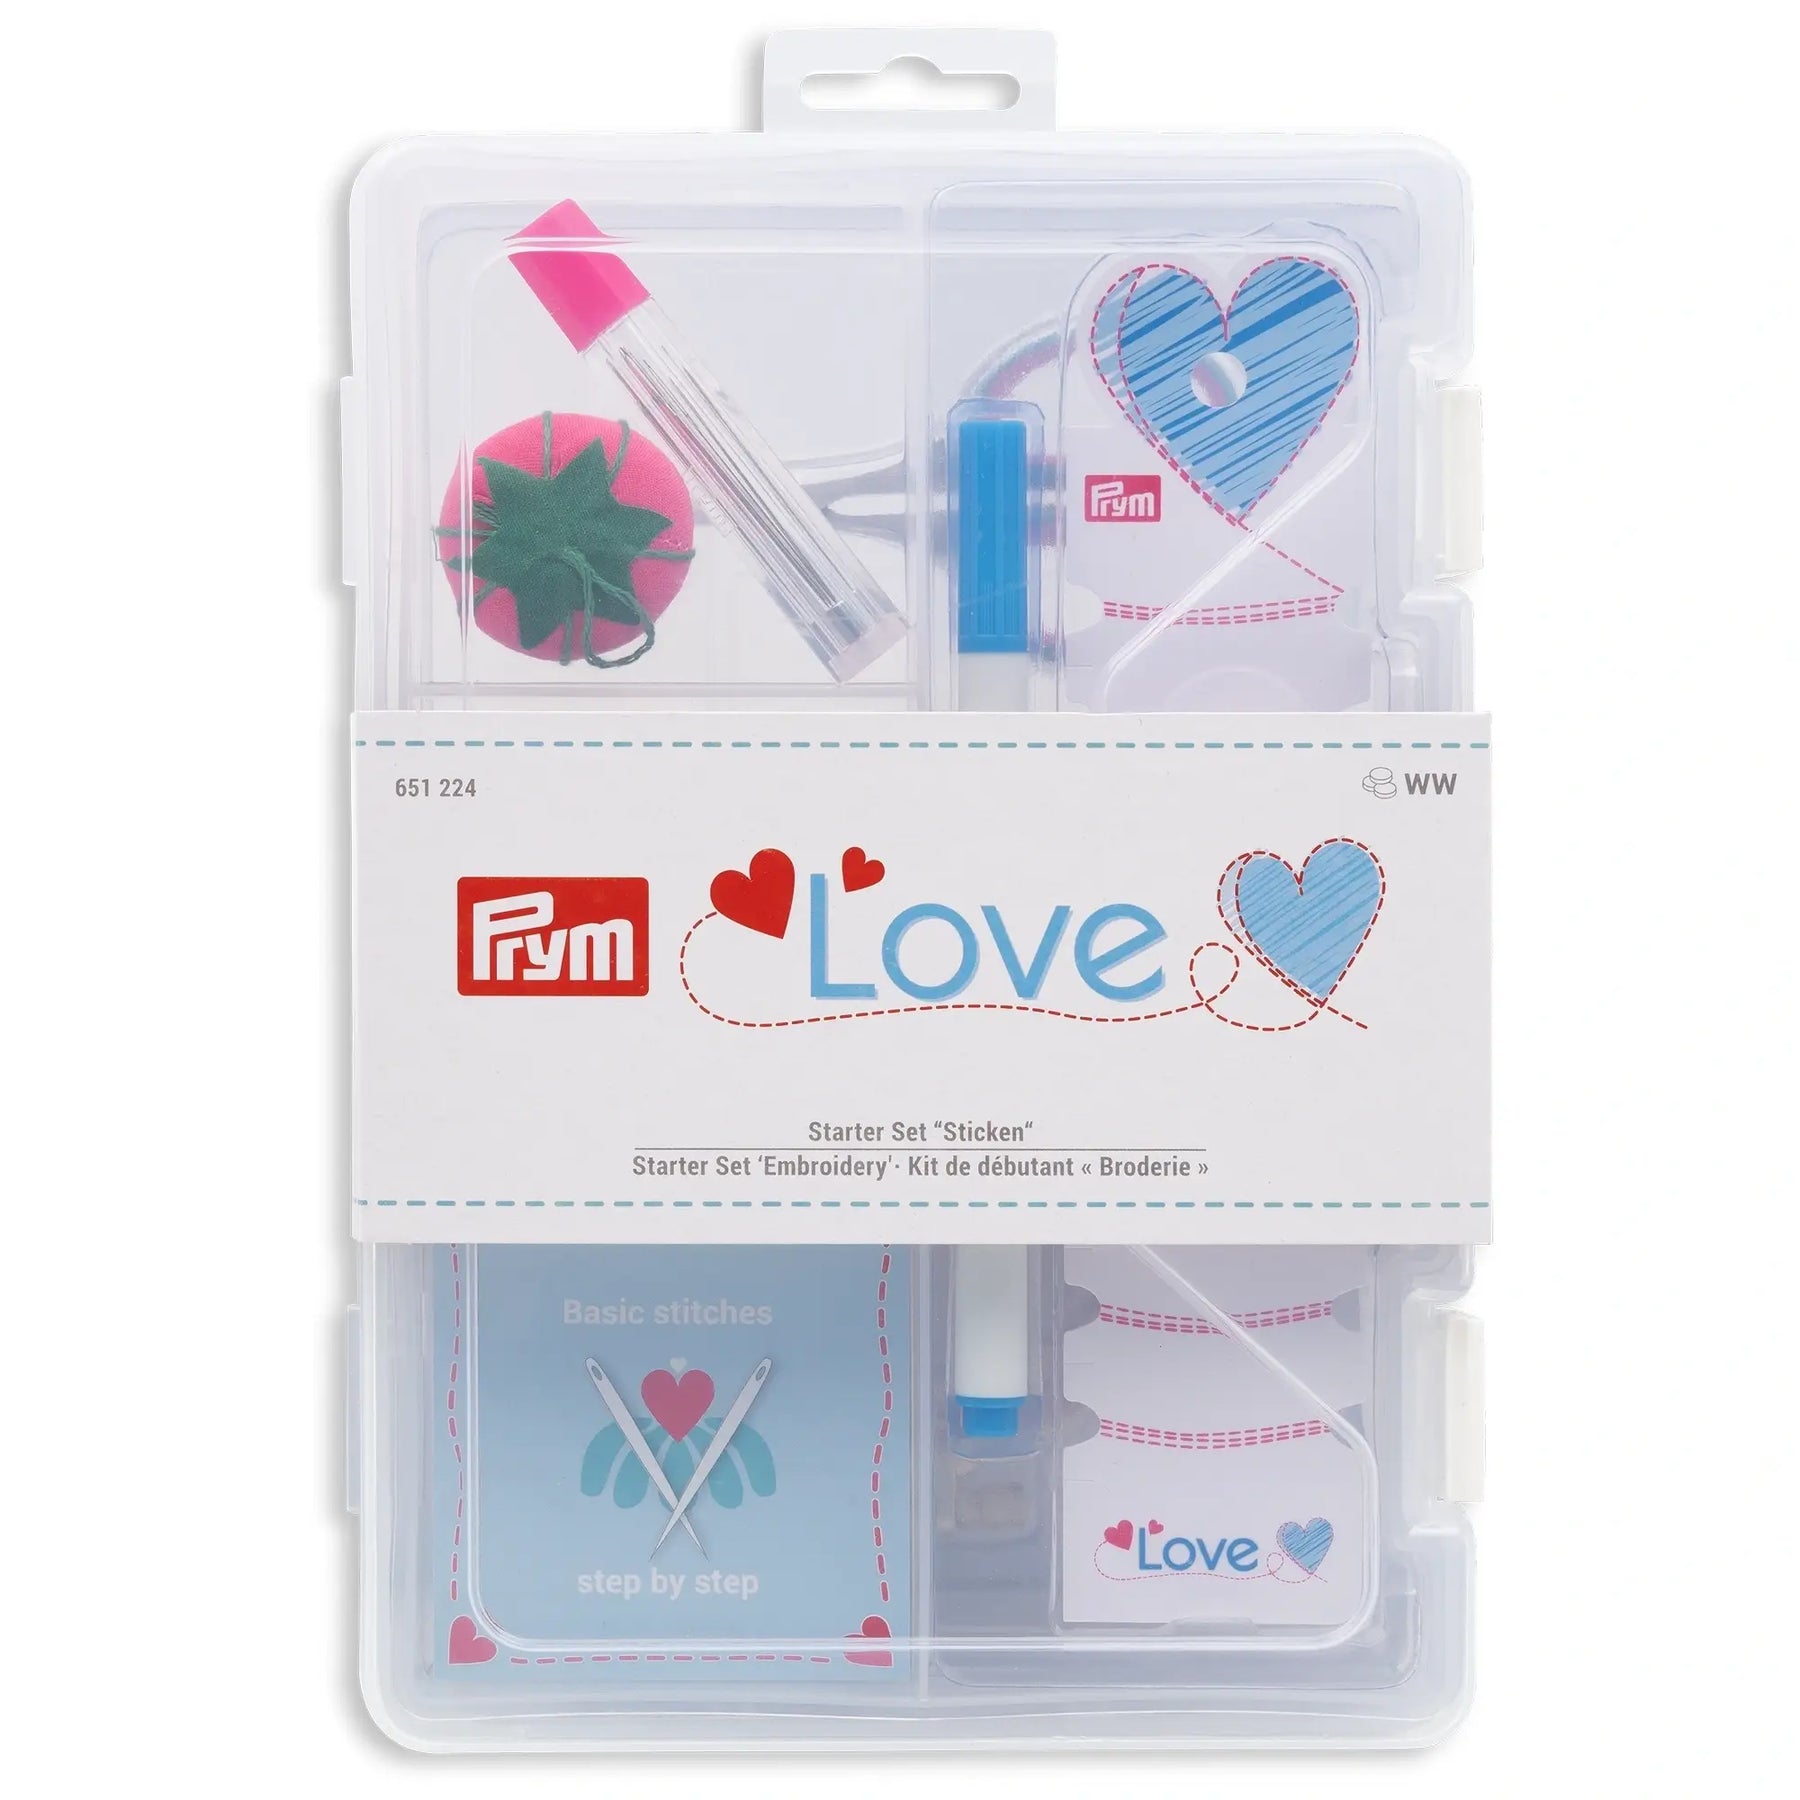 Starter kit ricamo Prym Love assortimento base regalo cucito